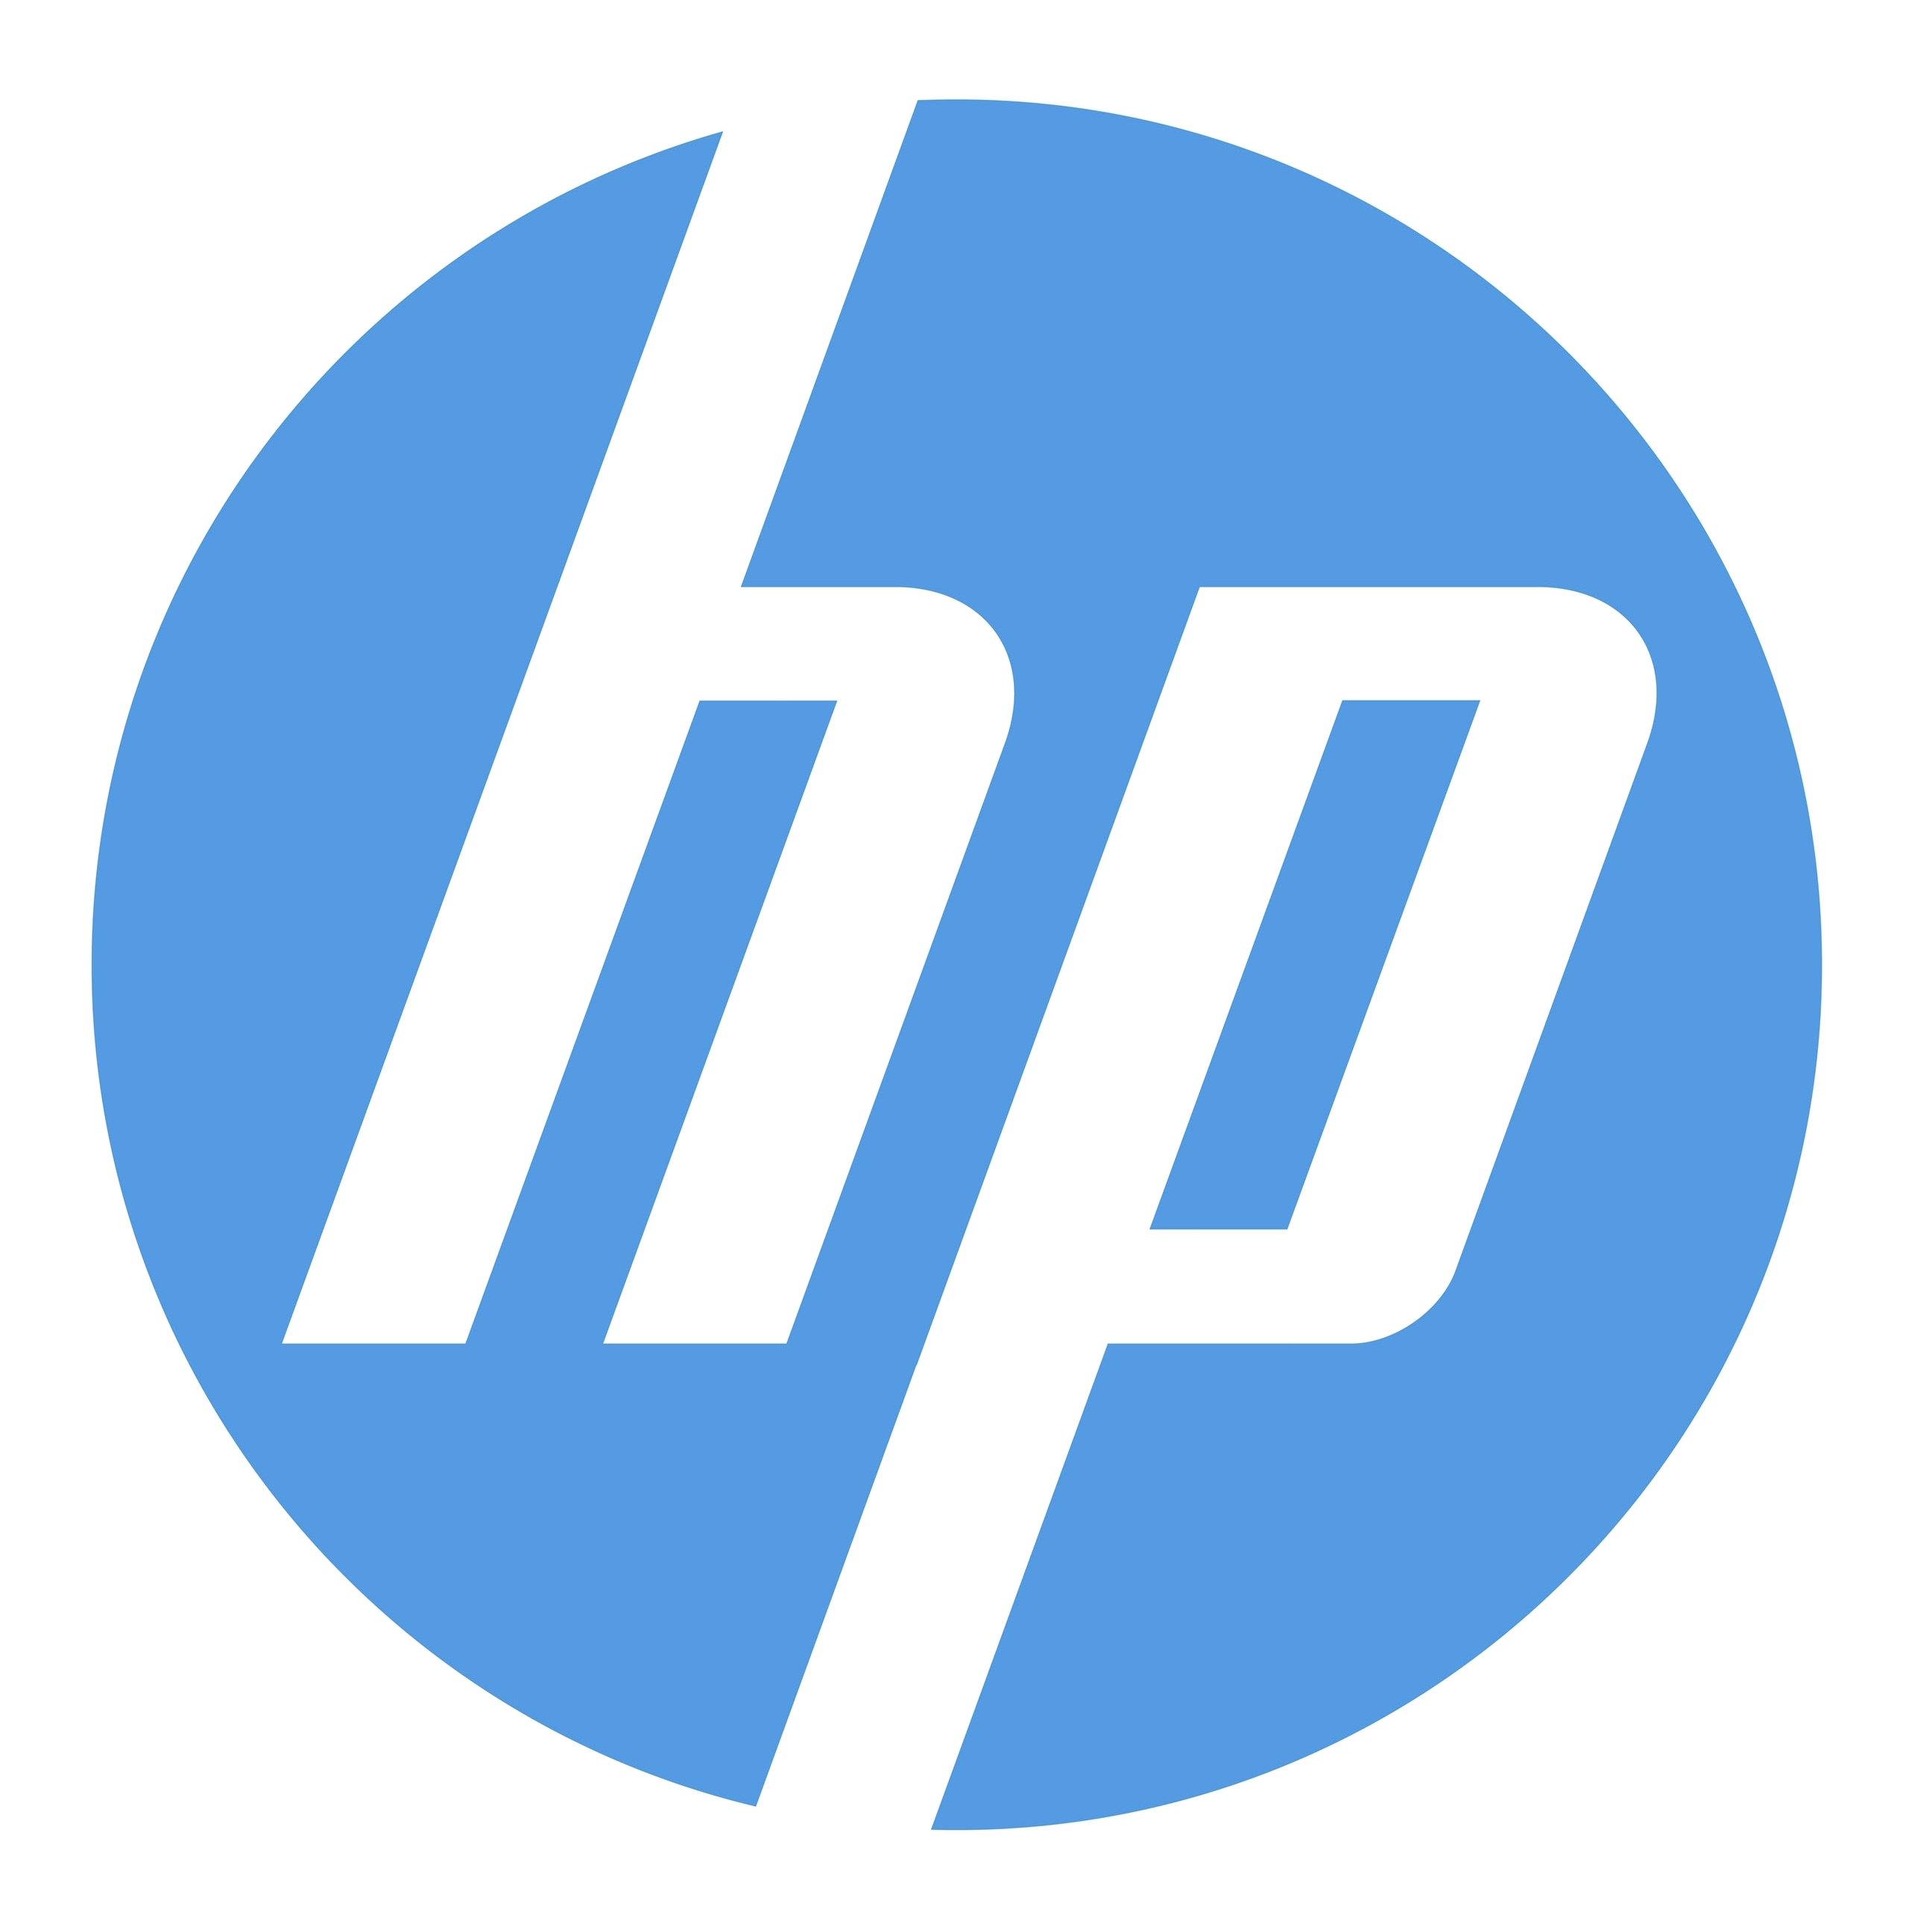 HP Logo PNG-Bild - PurePNG | Kostenlose transparente CC0-PNG-Bildbibliothek